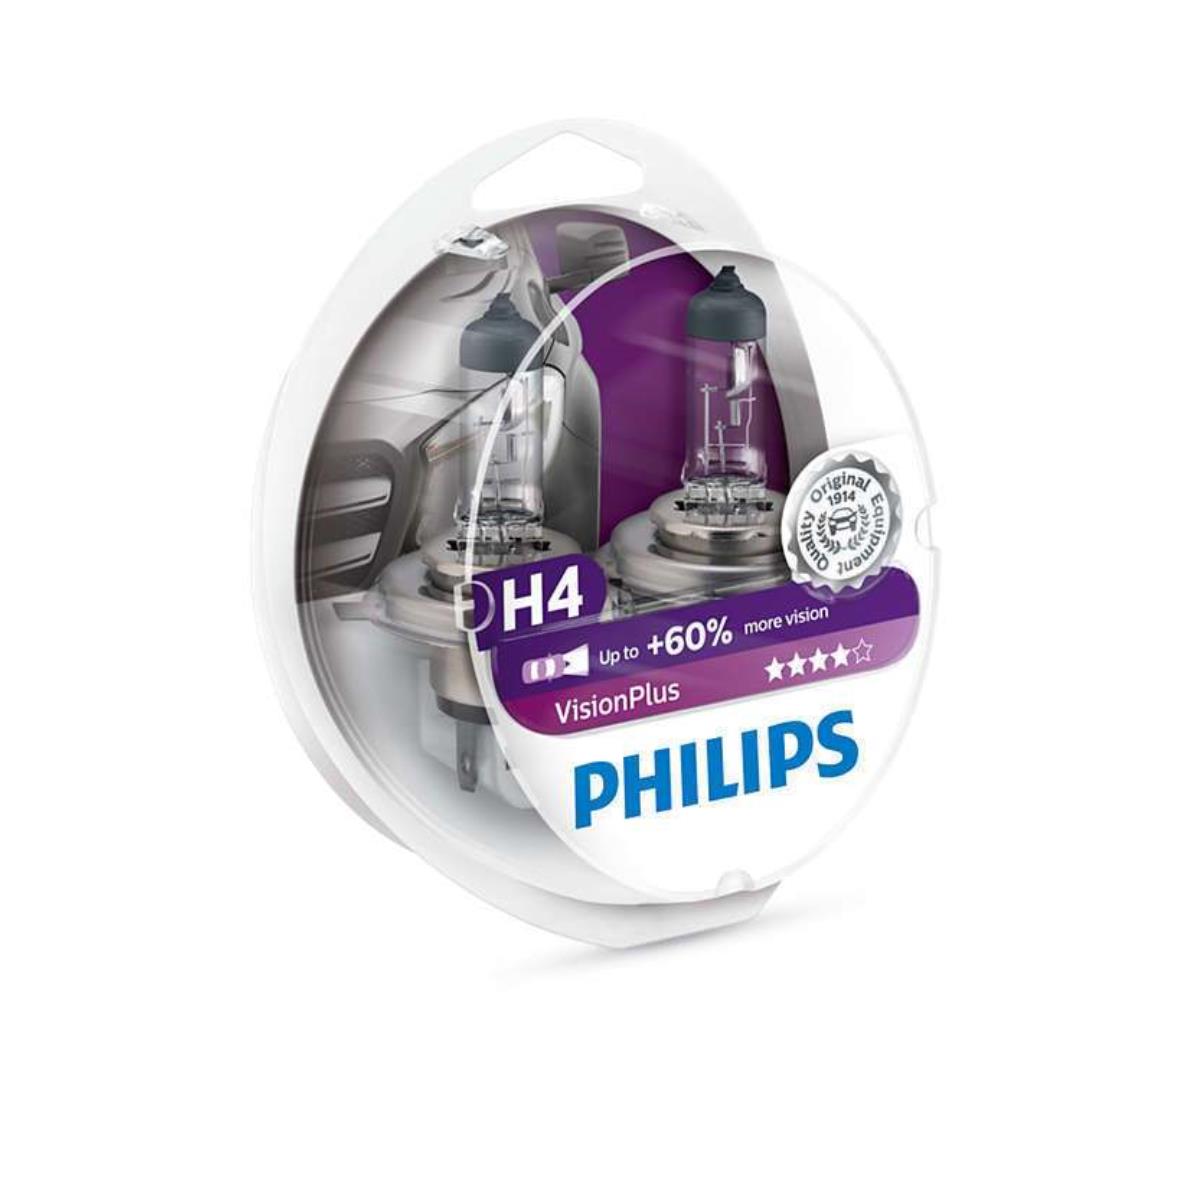 Philips Vision Plus +60% 2x H4 12V 60/55W P43t